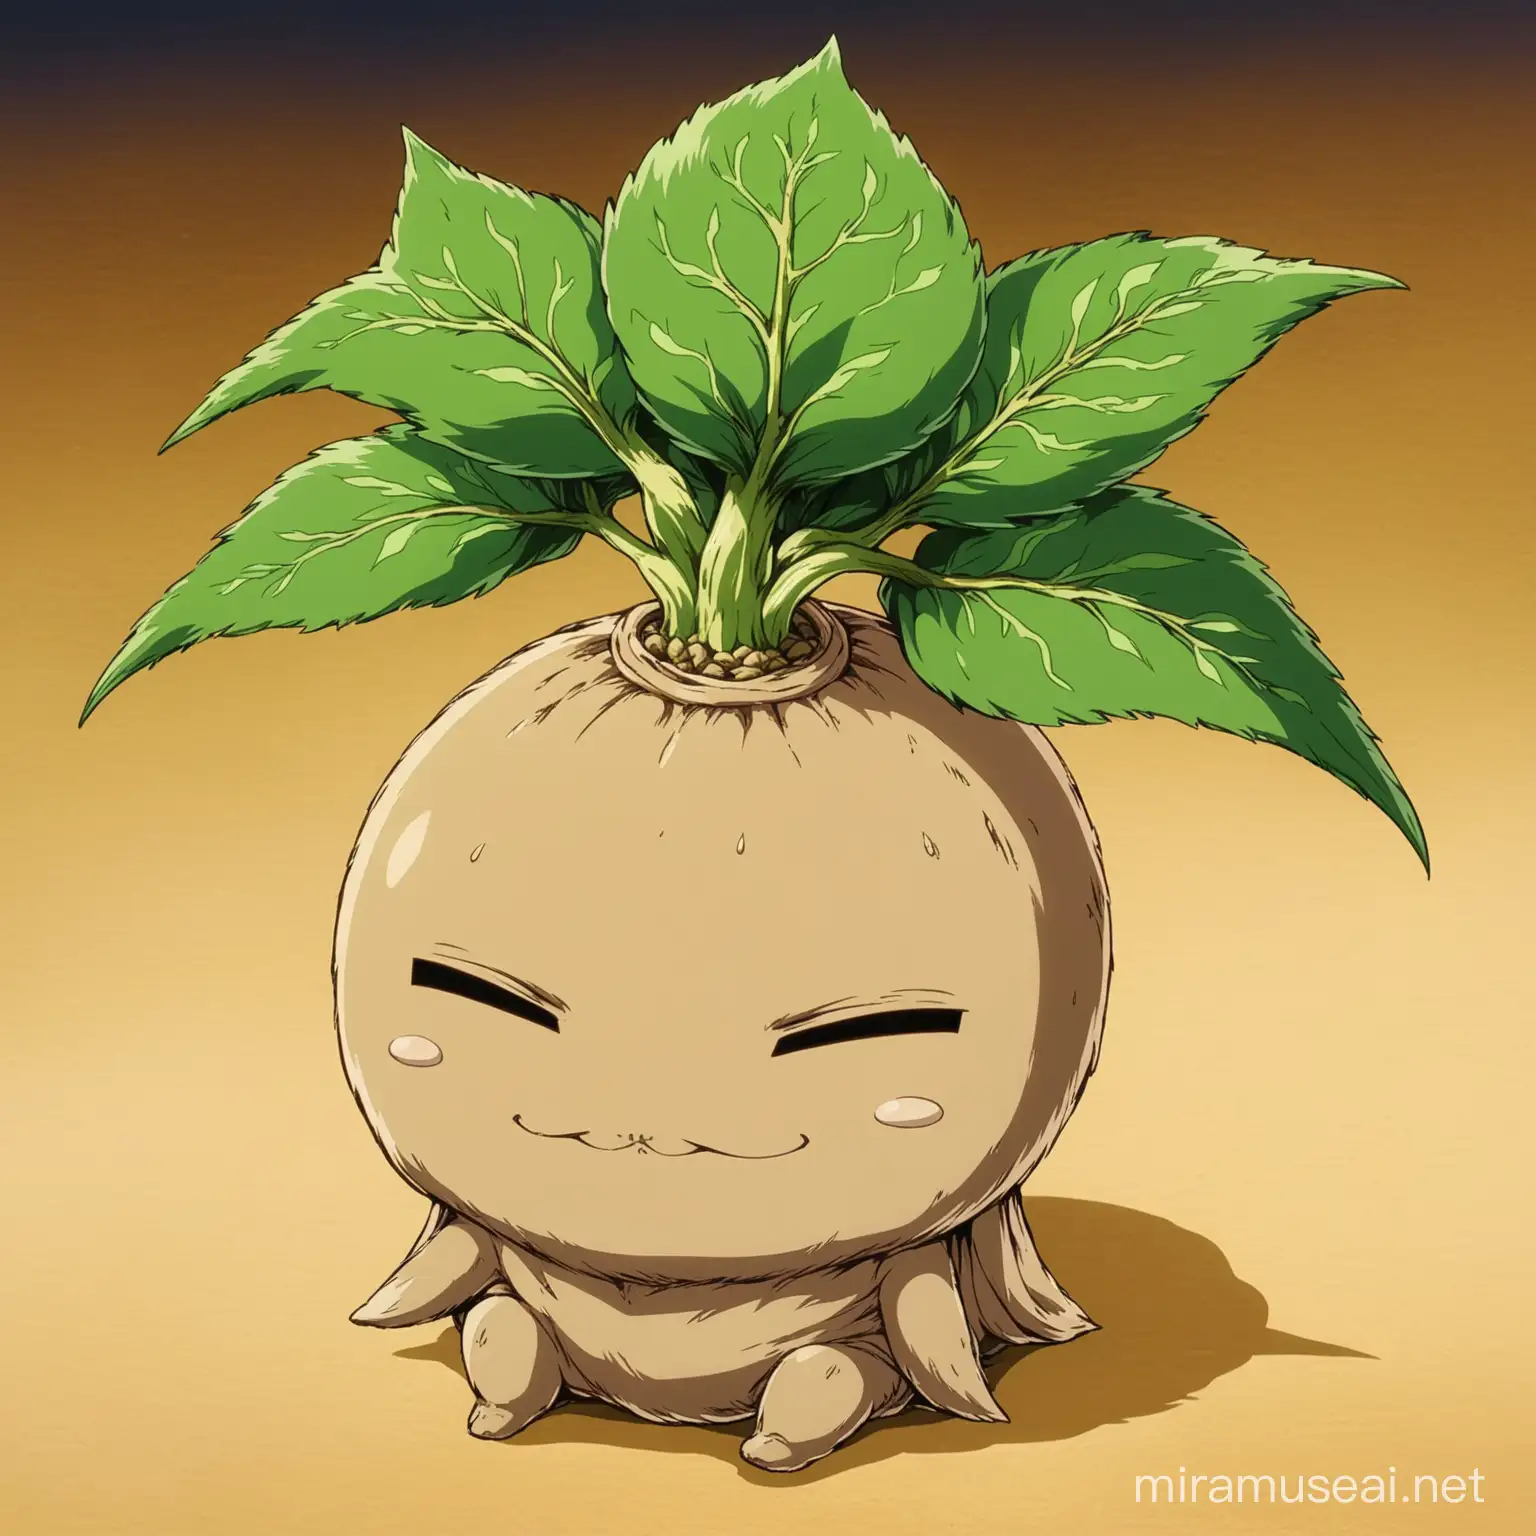 Enchanting Anime Depiction of an Ancient Mandrake